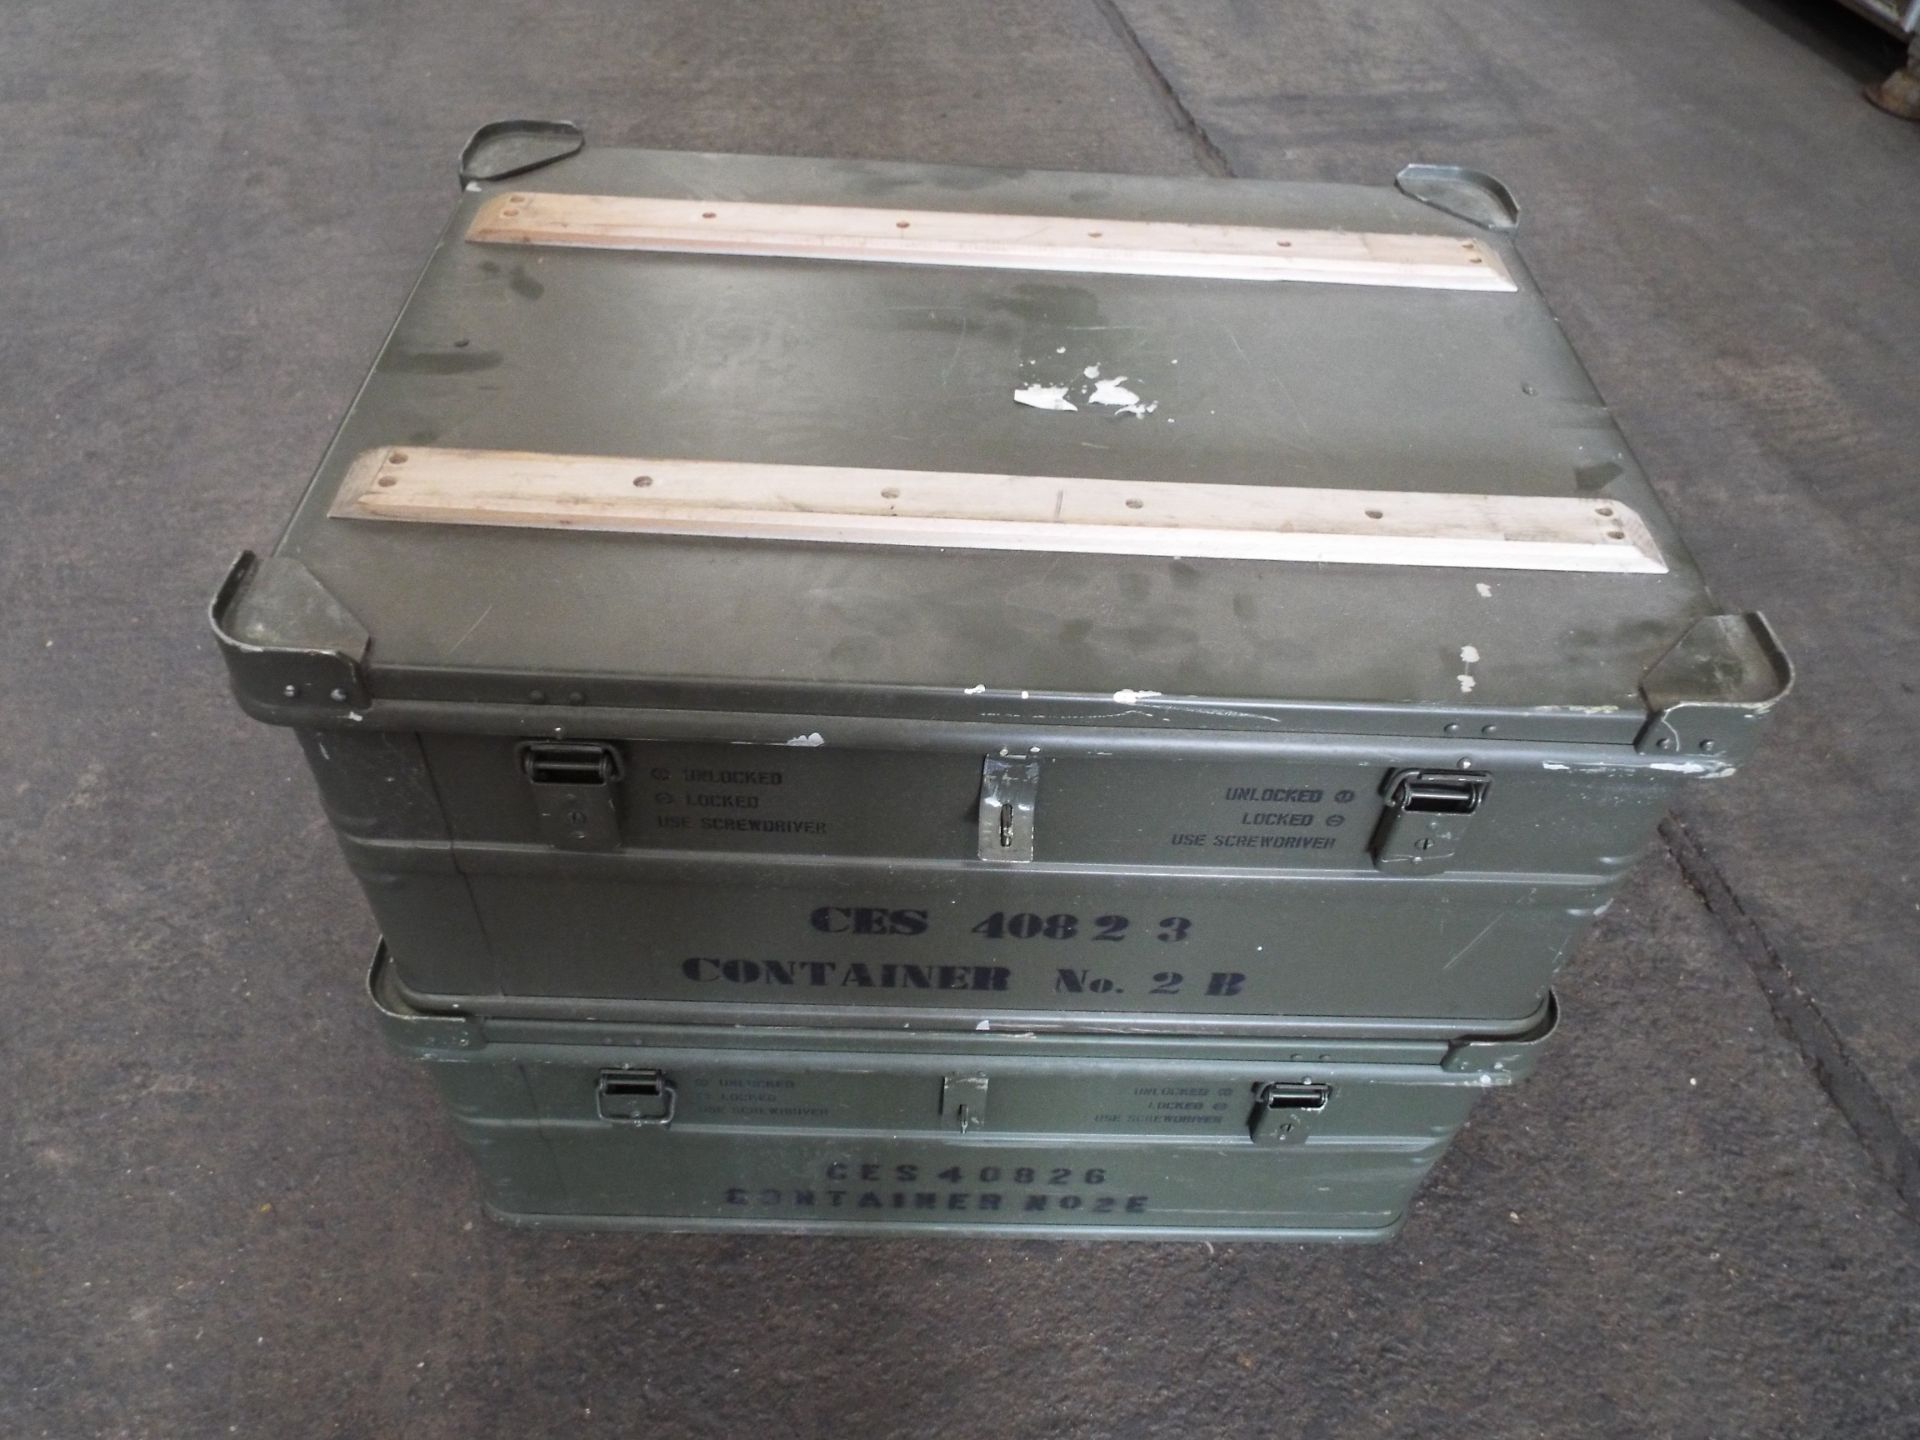 2 x Heavy Duty Zarges Aluminium Cases - Image 3 of 6